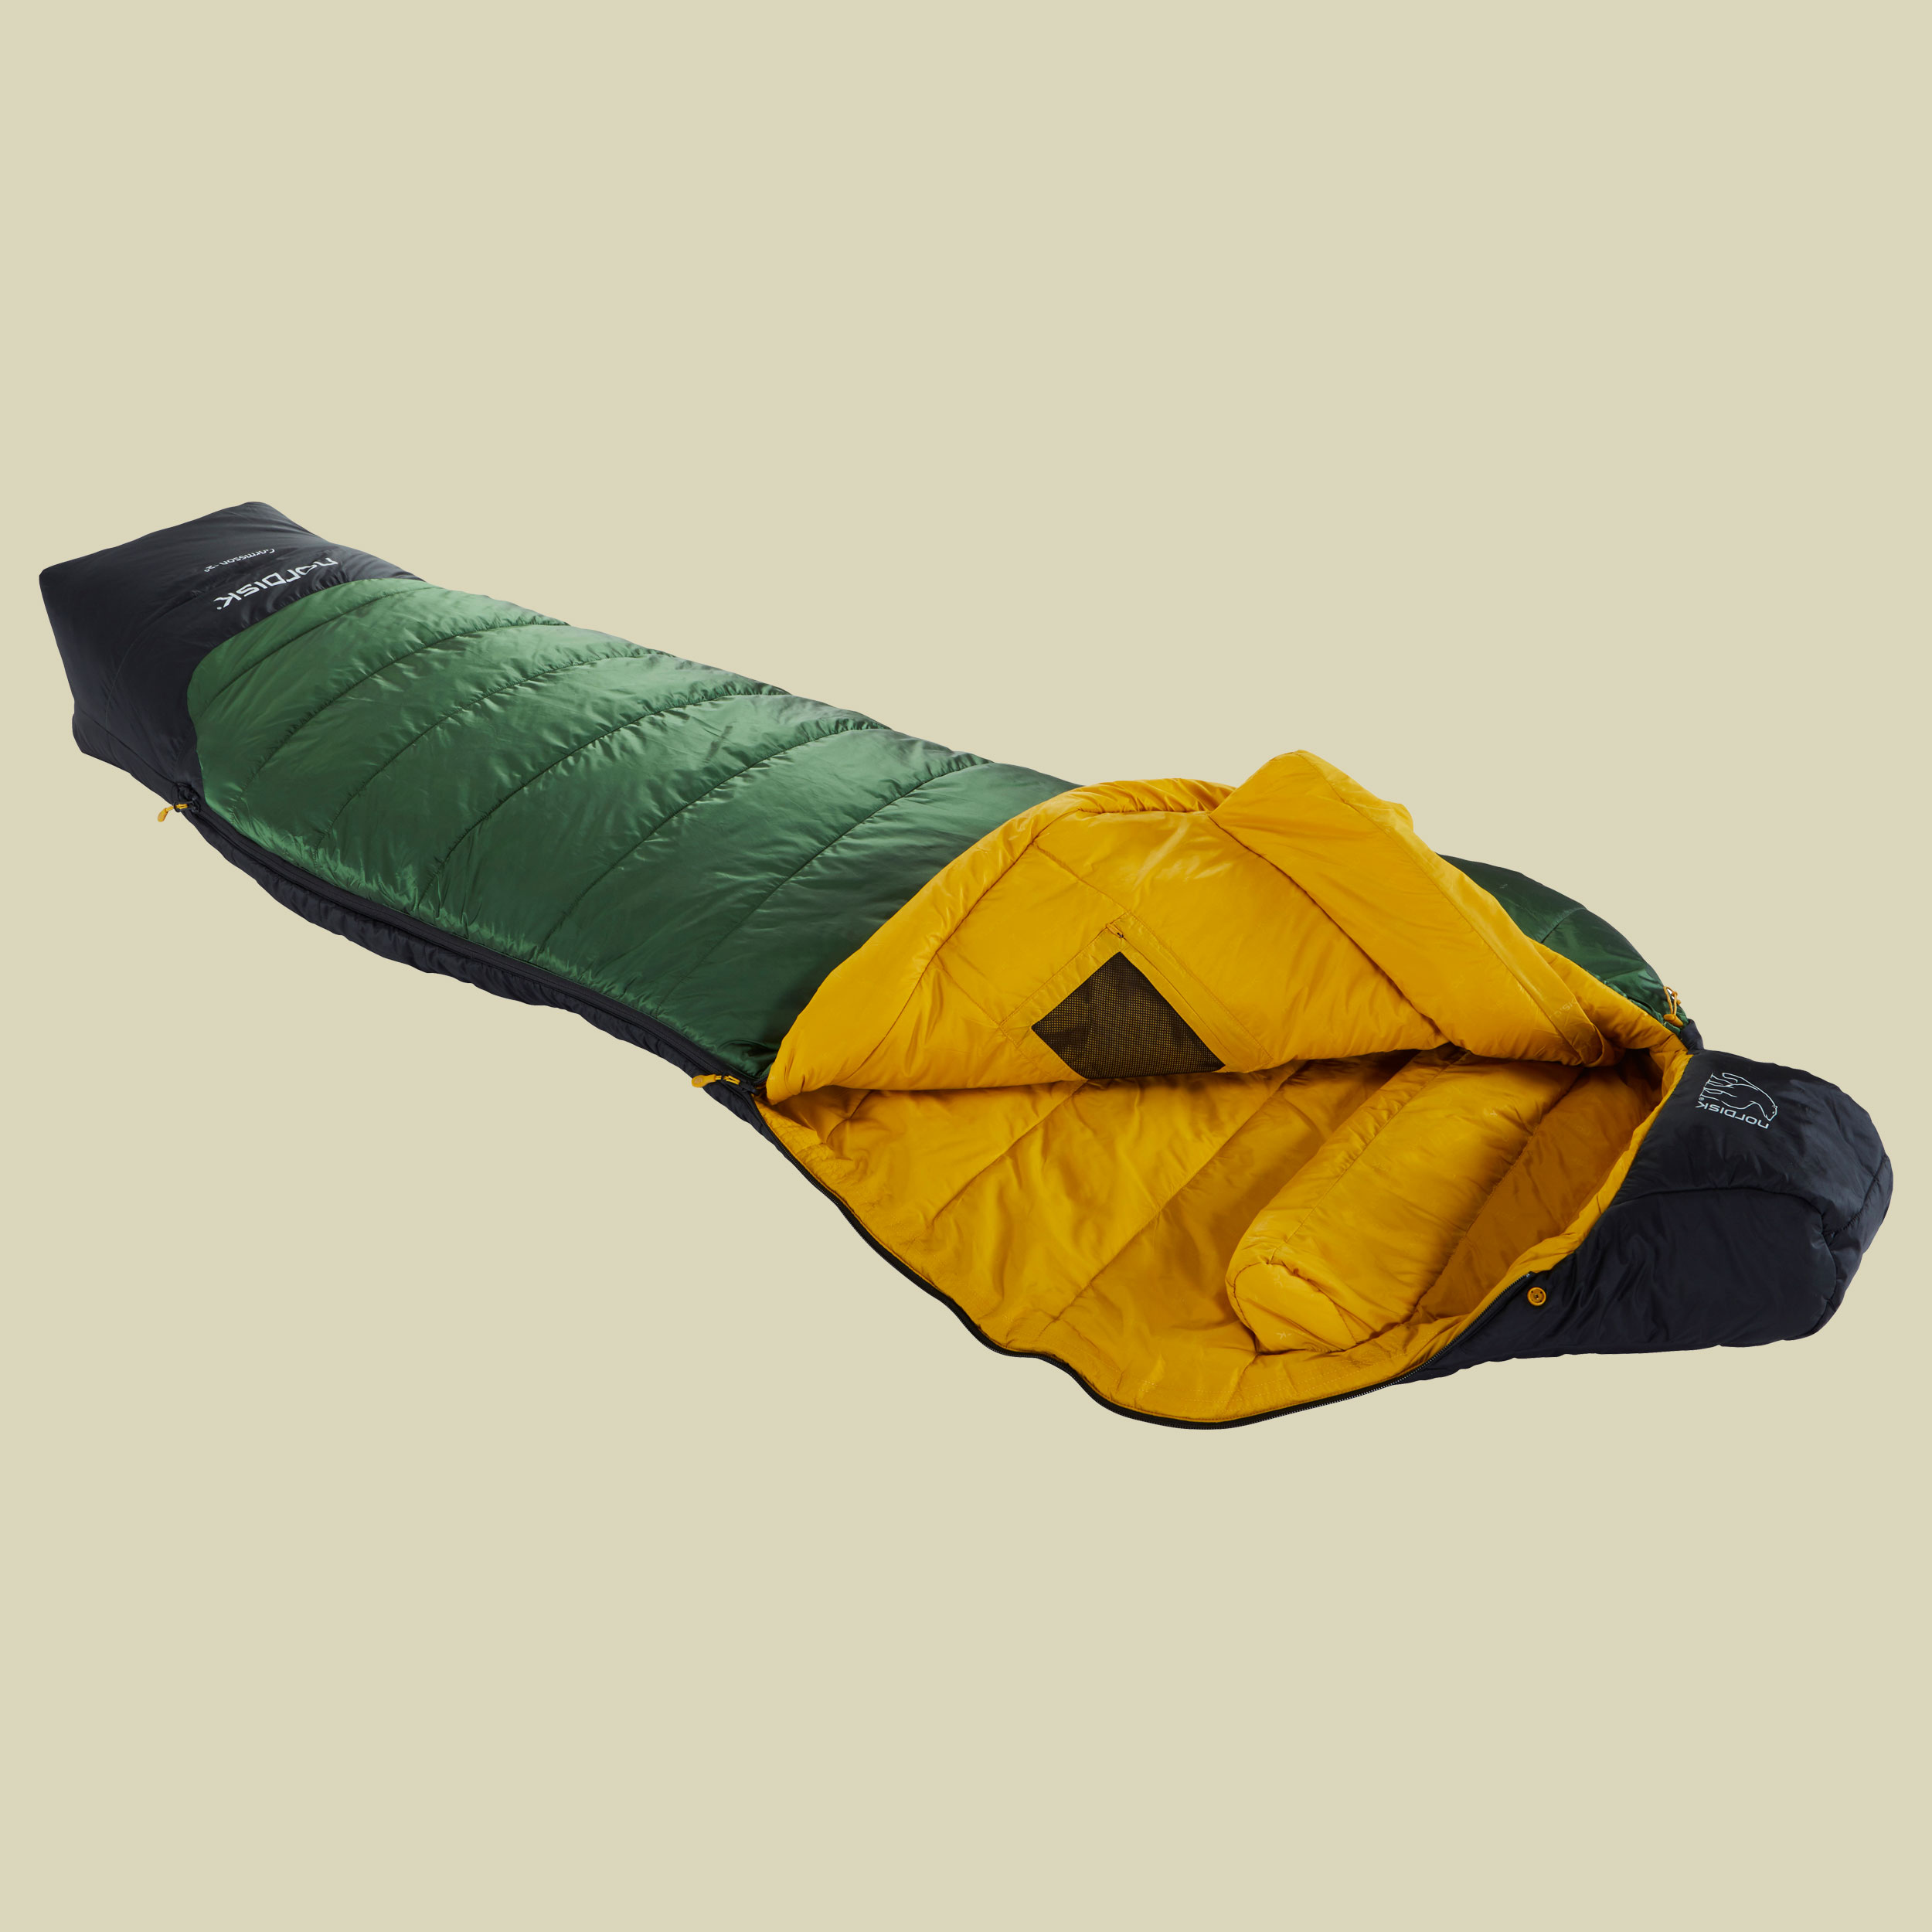 Gormsson -2 Curve bis Körpergröße 175 cm (M) Farbe artichoke green/mustard yellow/black, Reißverschluss links